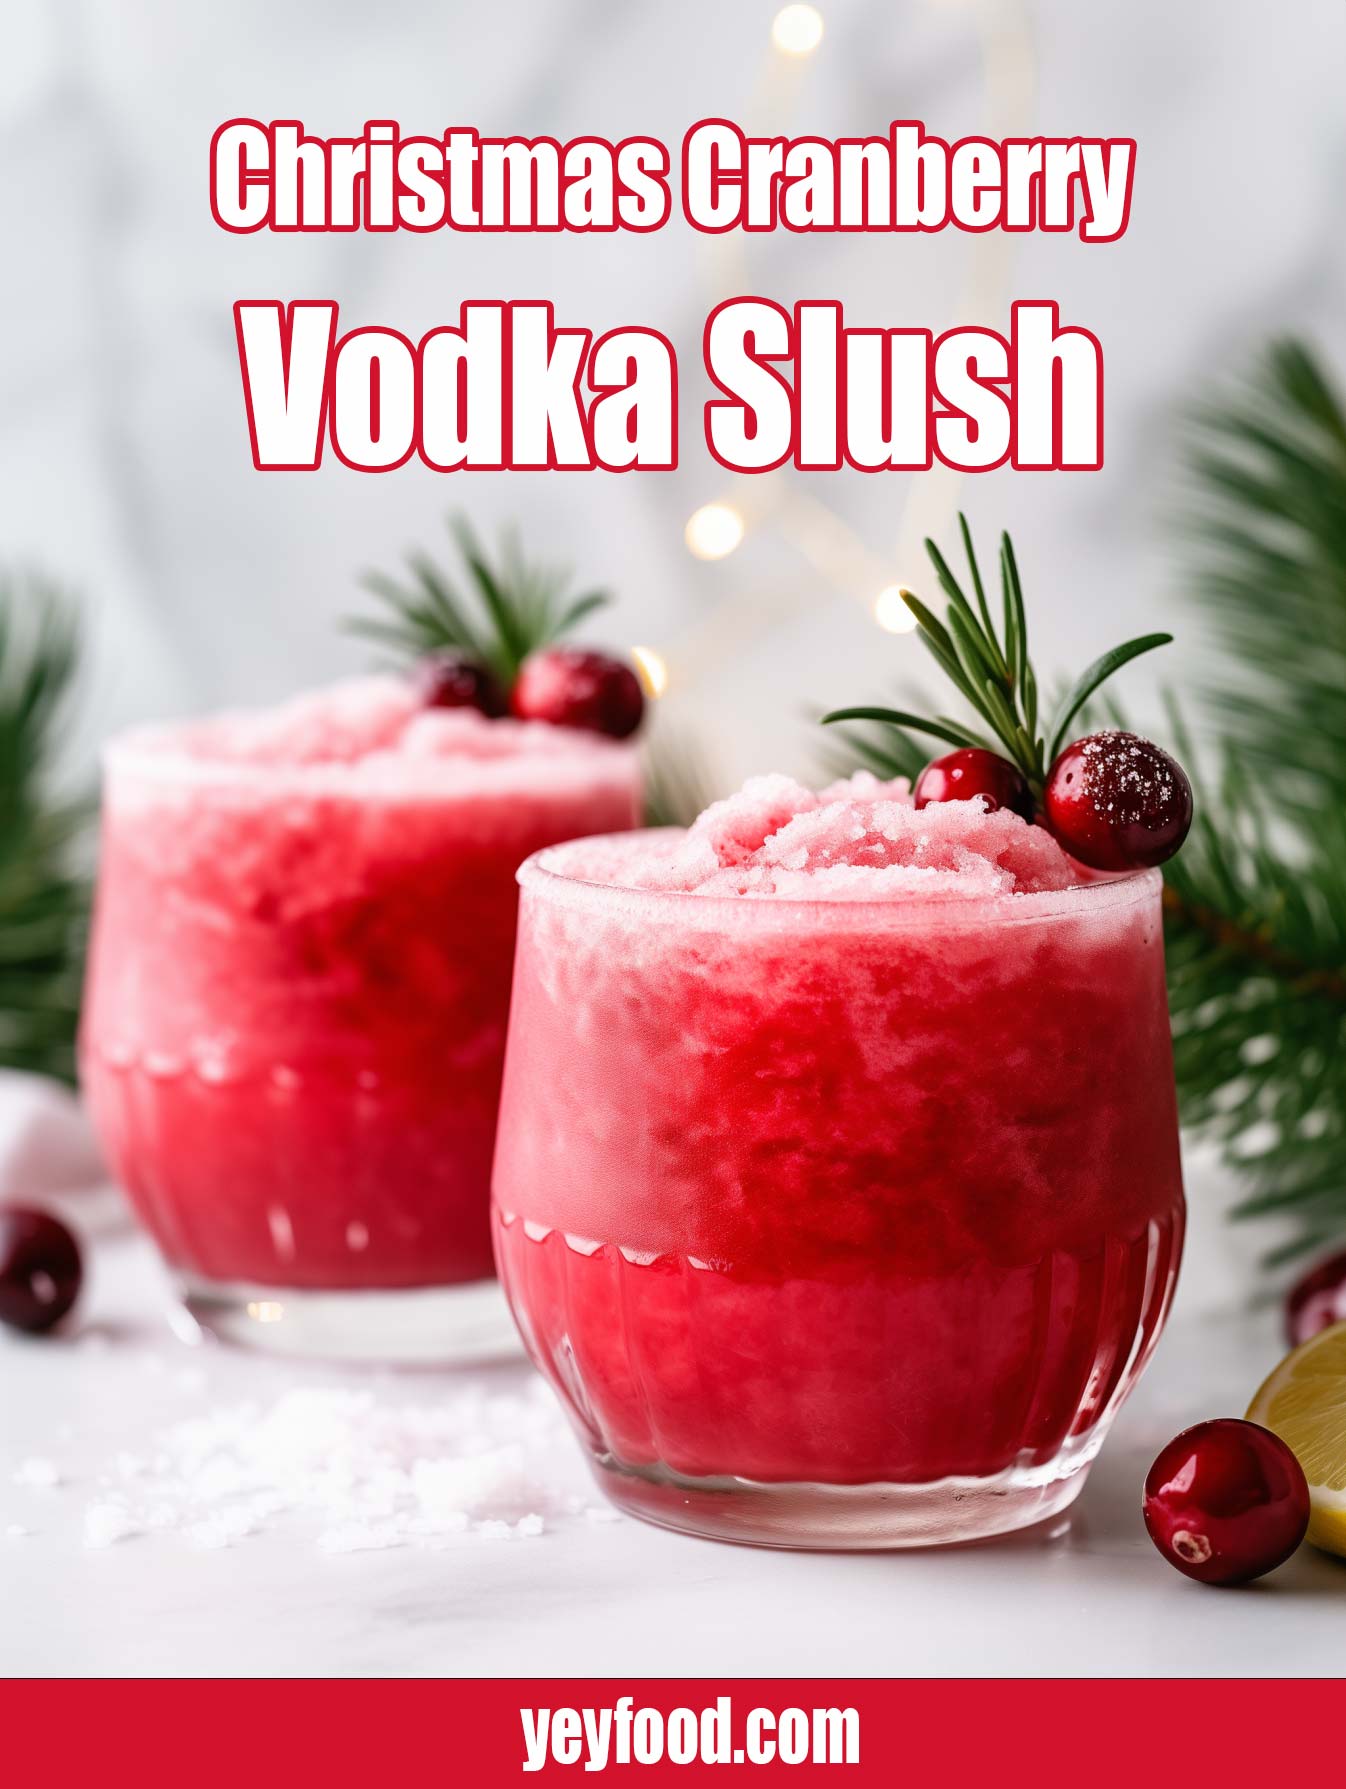 Vodka Slushy Recipe